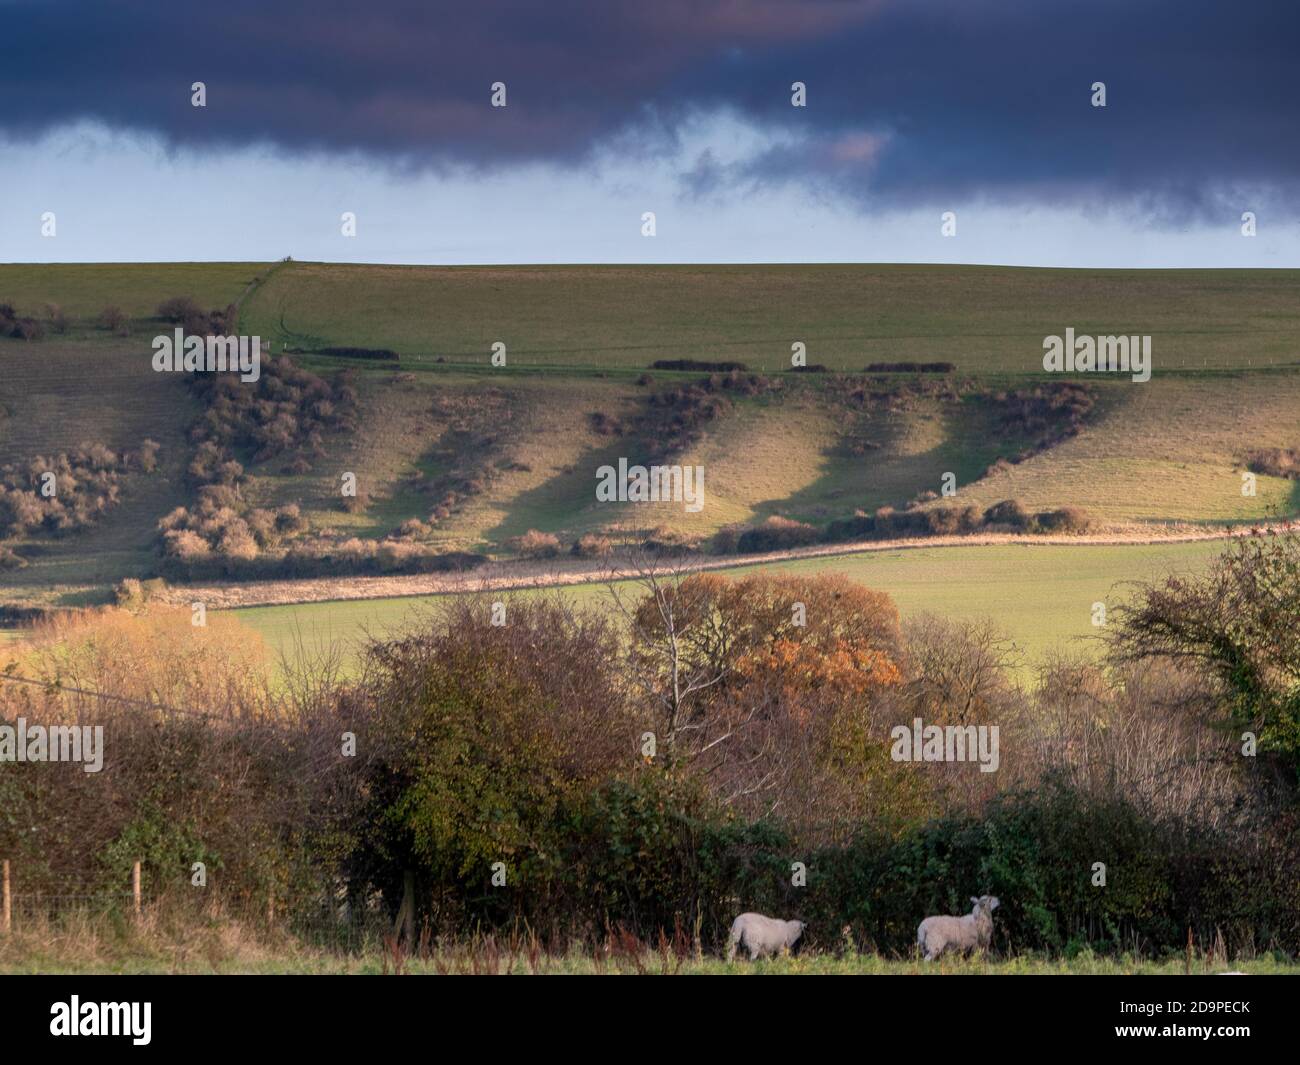 An Autumn, sun lit scene with sheep under darkening clouds near Westbury and Warminster in Wiltshire, England. Stock Photo